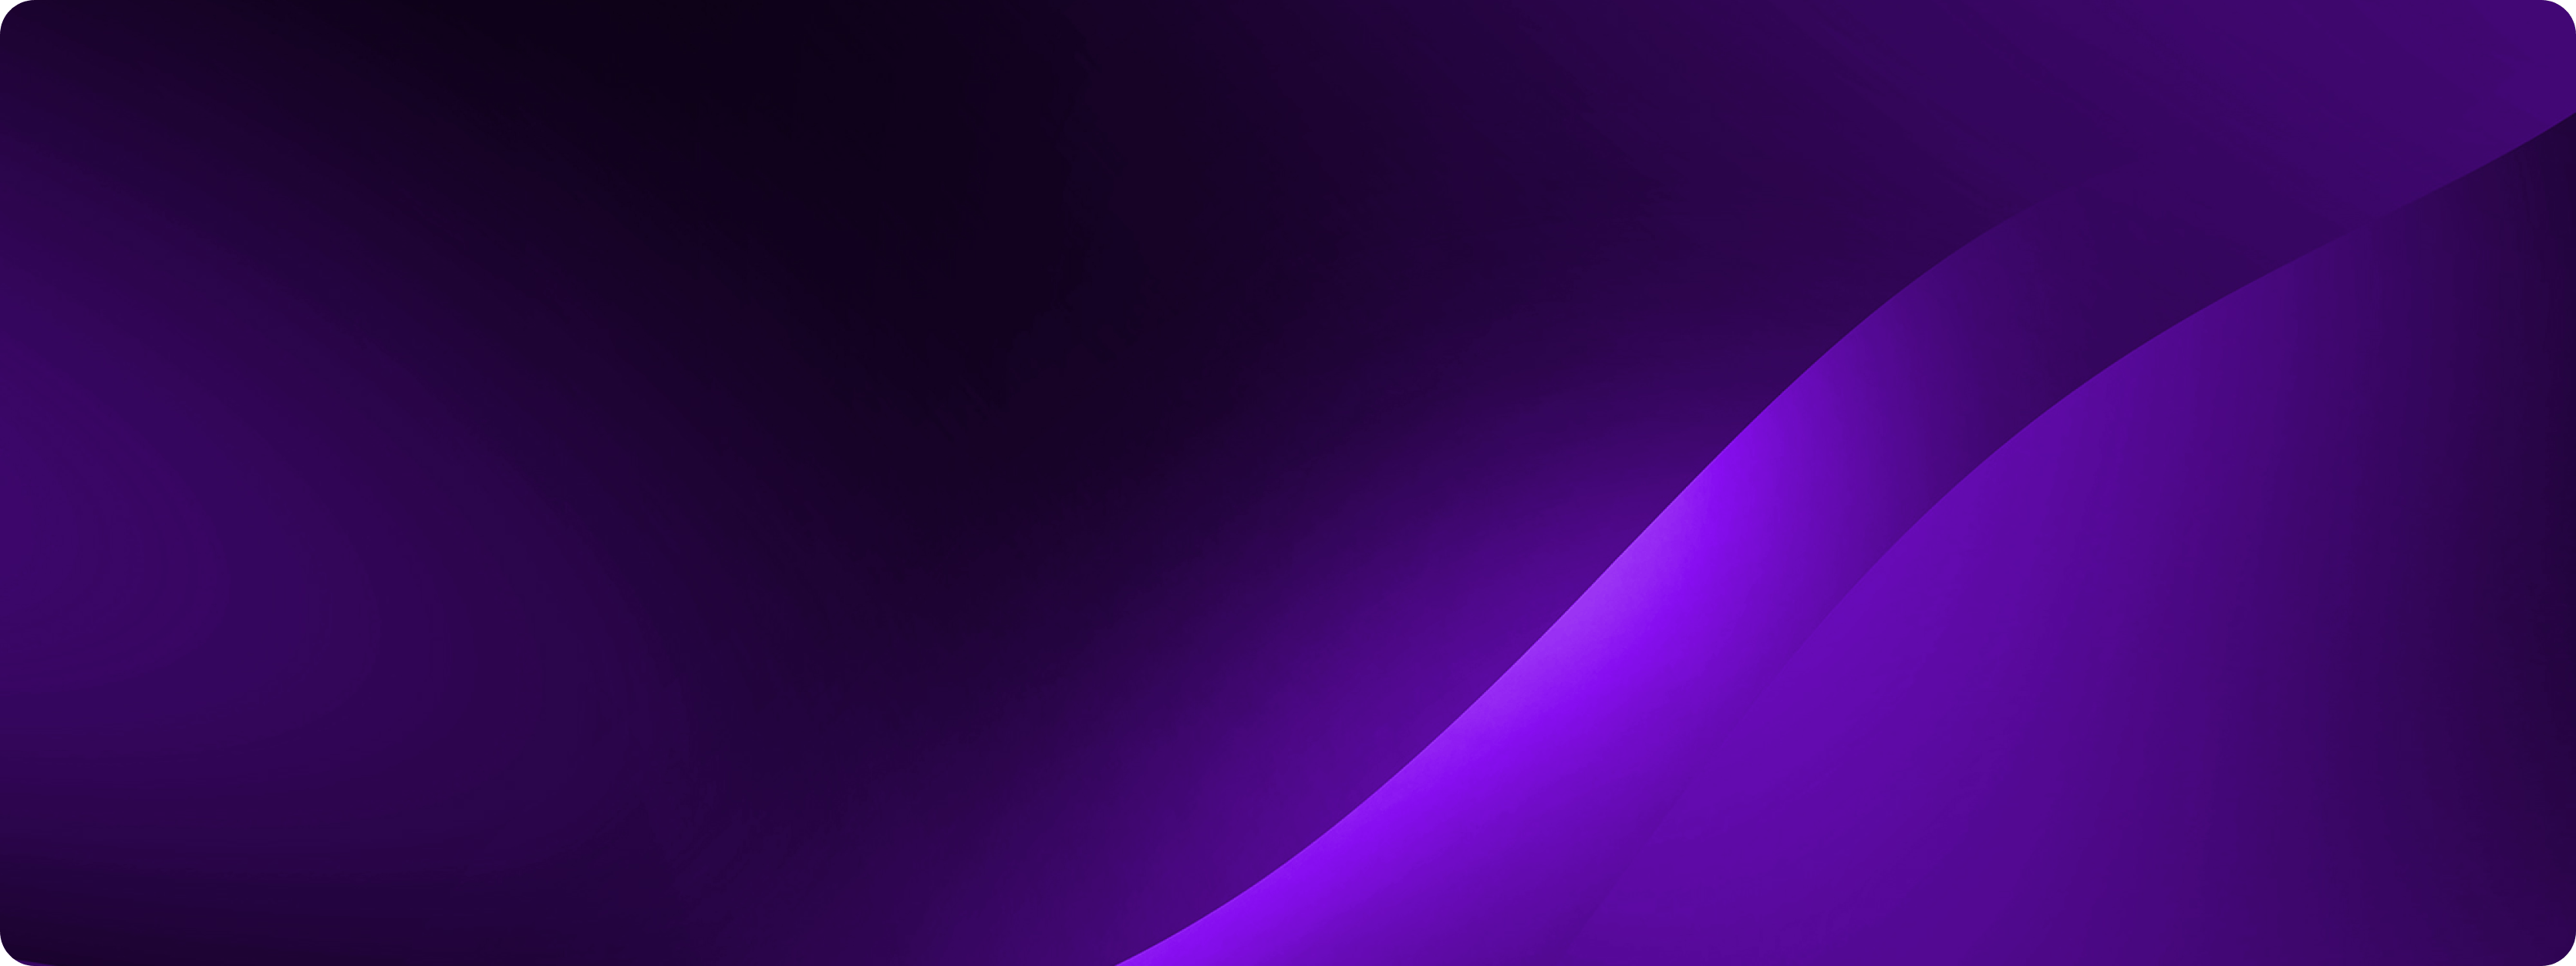 Dark purple background mobile re